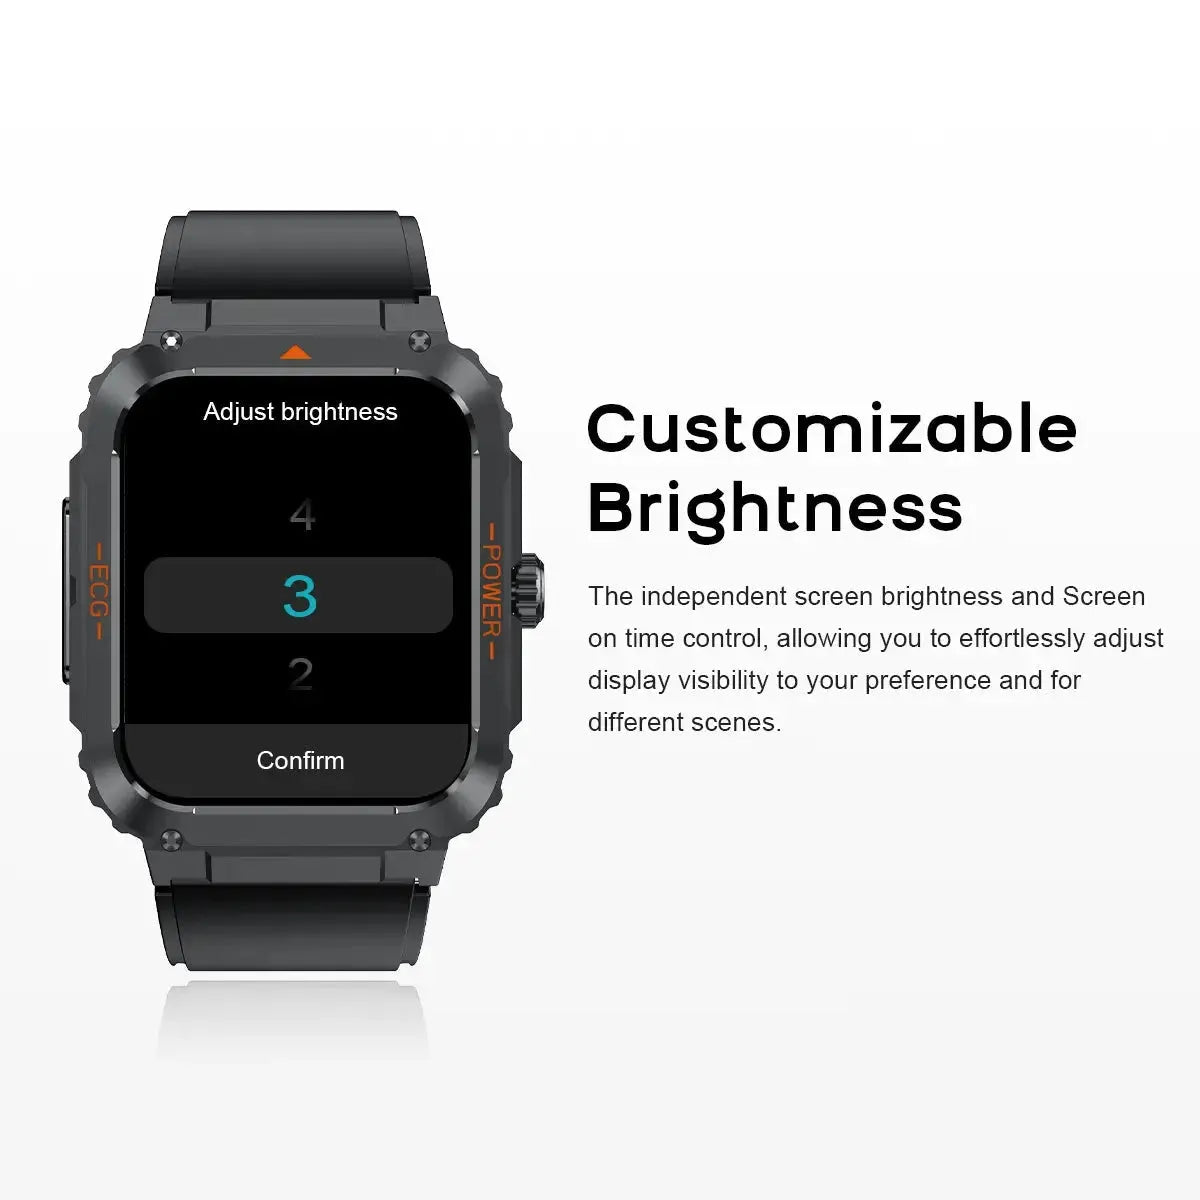 Tousains smartwatch S1 with customizable brightness